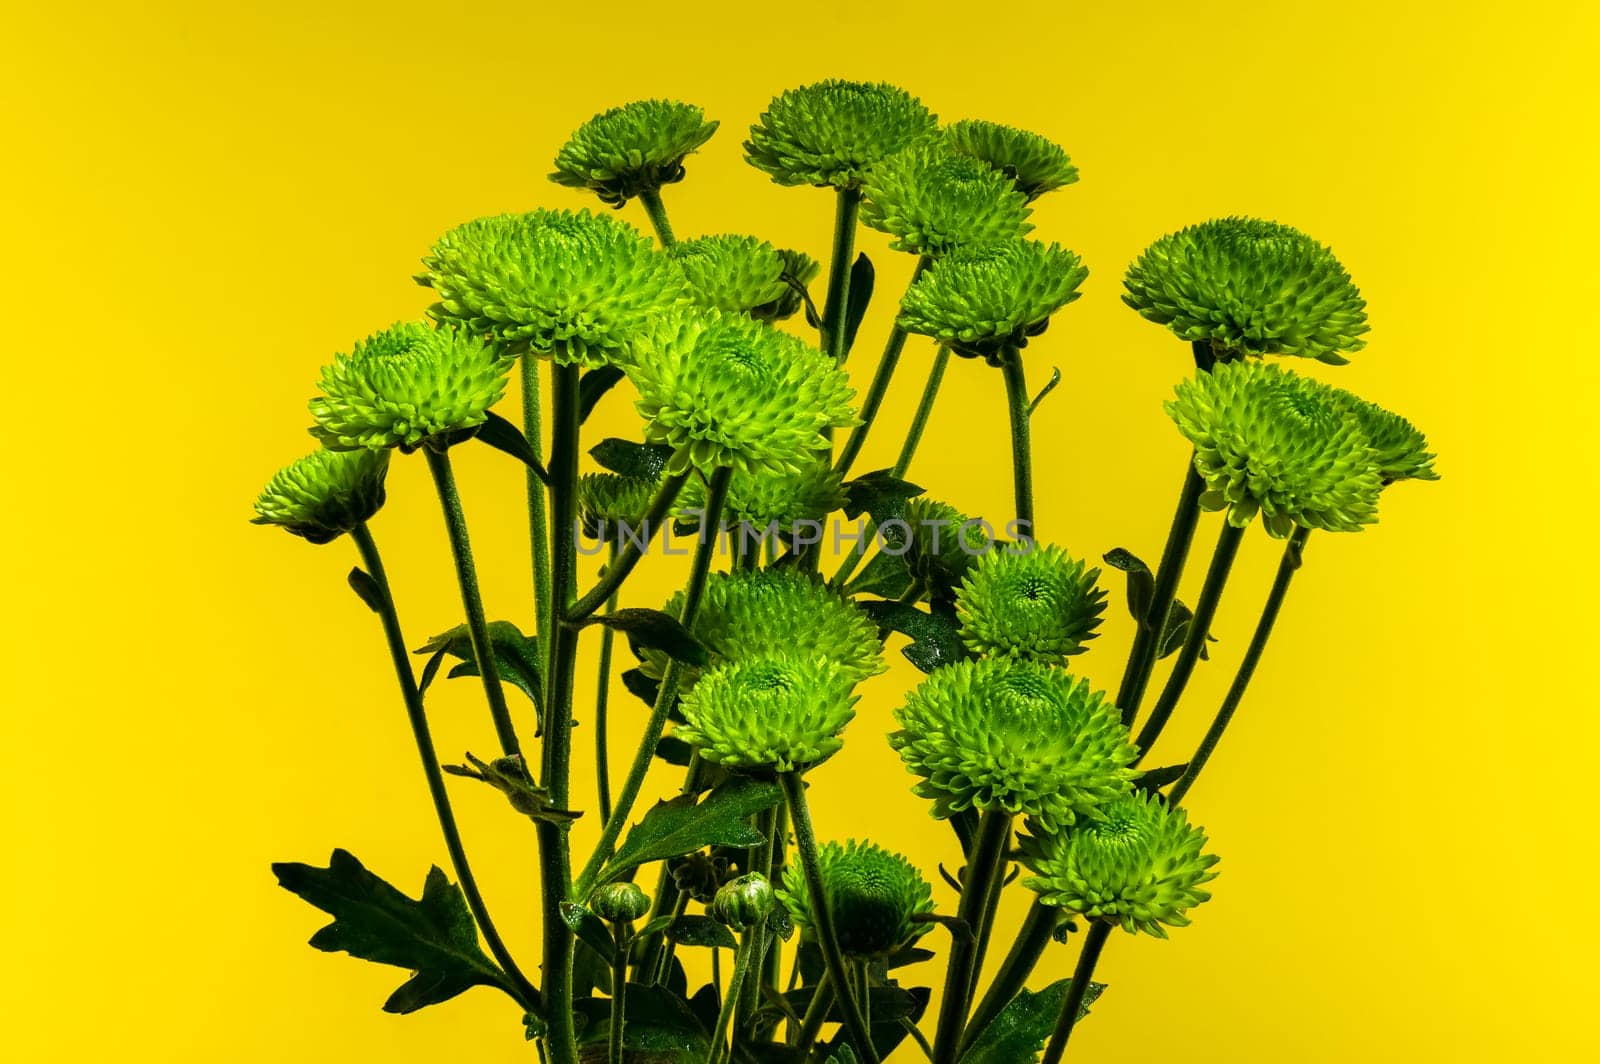 Green chrysanthemum on yellow background by Multipedia